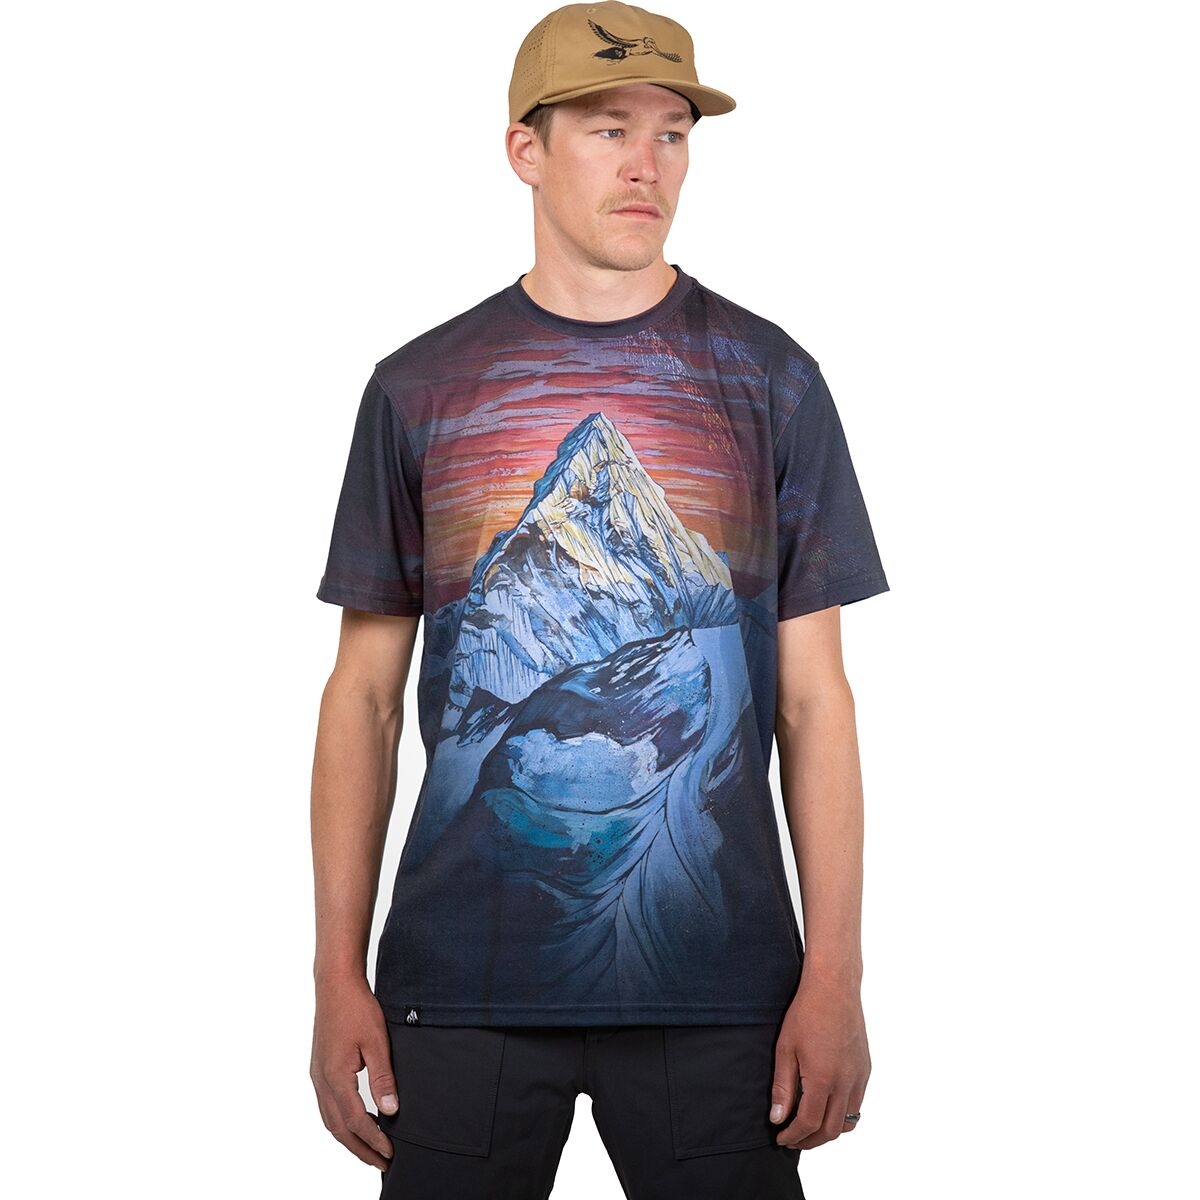 Jones Snowboards Ama Dablam T-Shirt - Men's